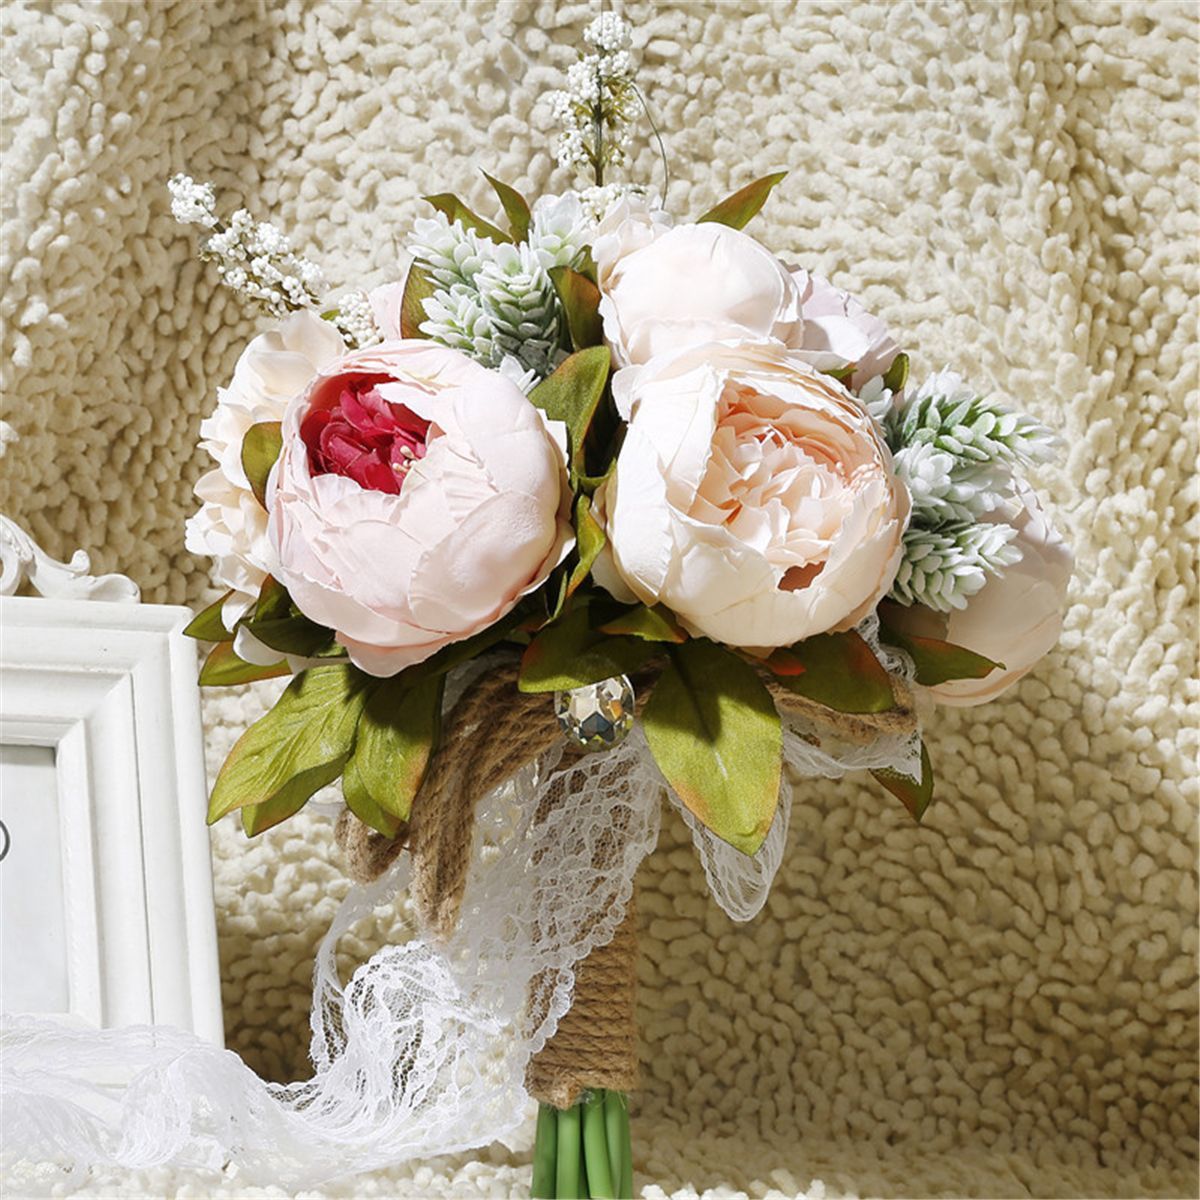 Women-Bridal-Bouquet-Artificial-Flower-Rose-Accessories-Bridesmaid-Wedding-Favors-Decor-1438512